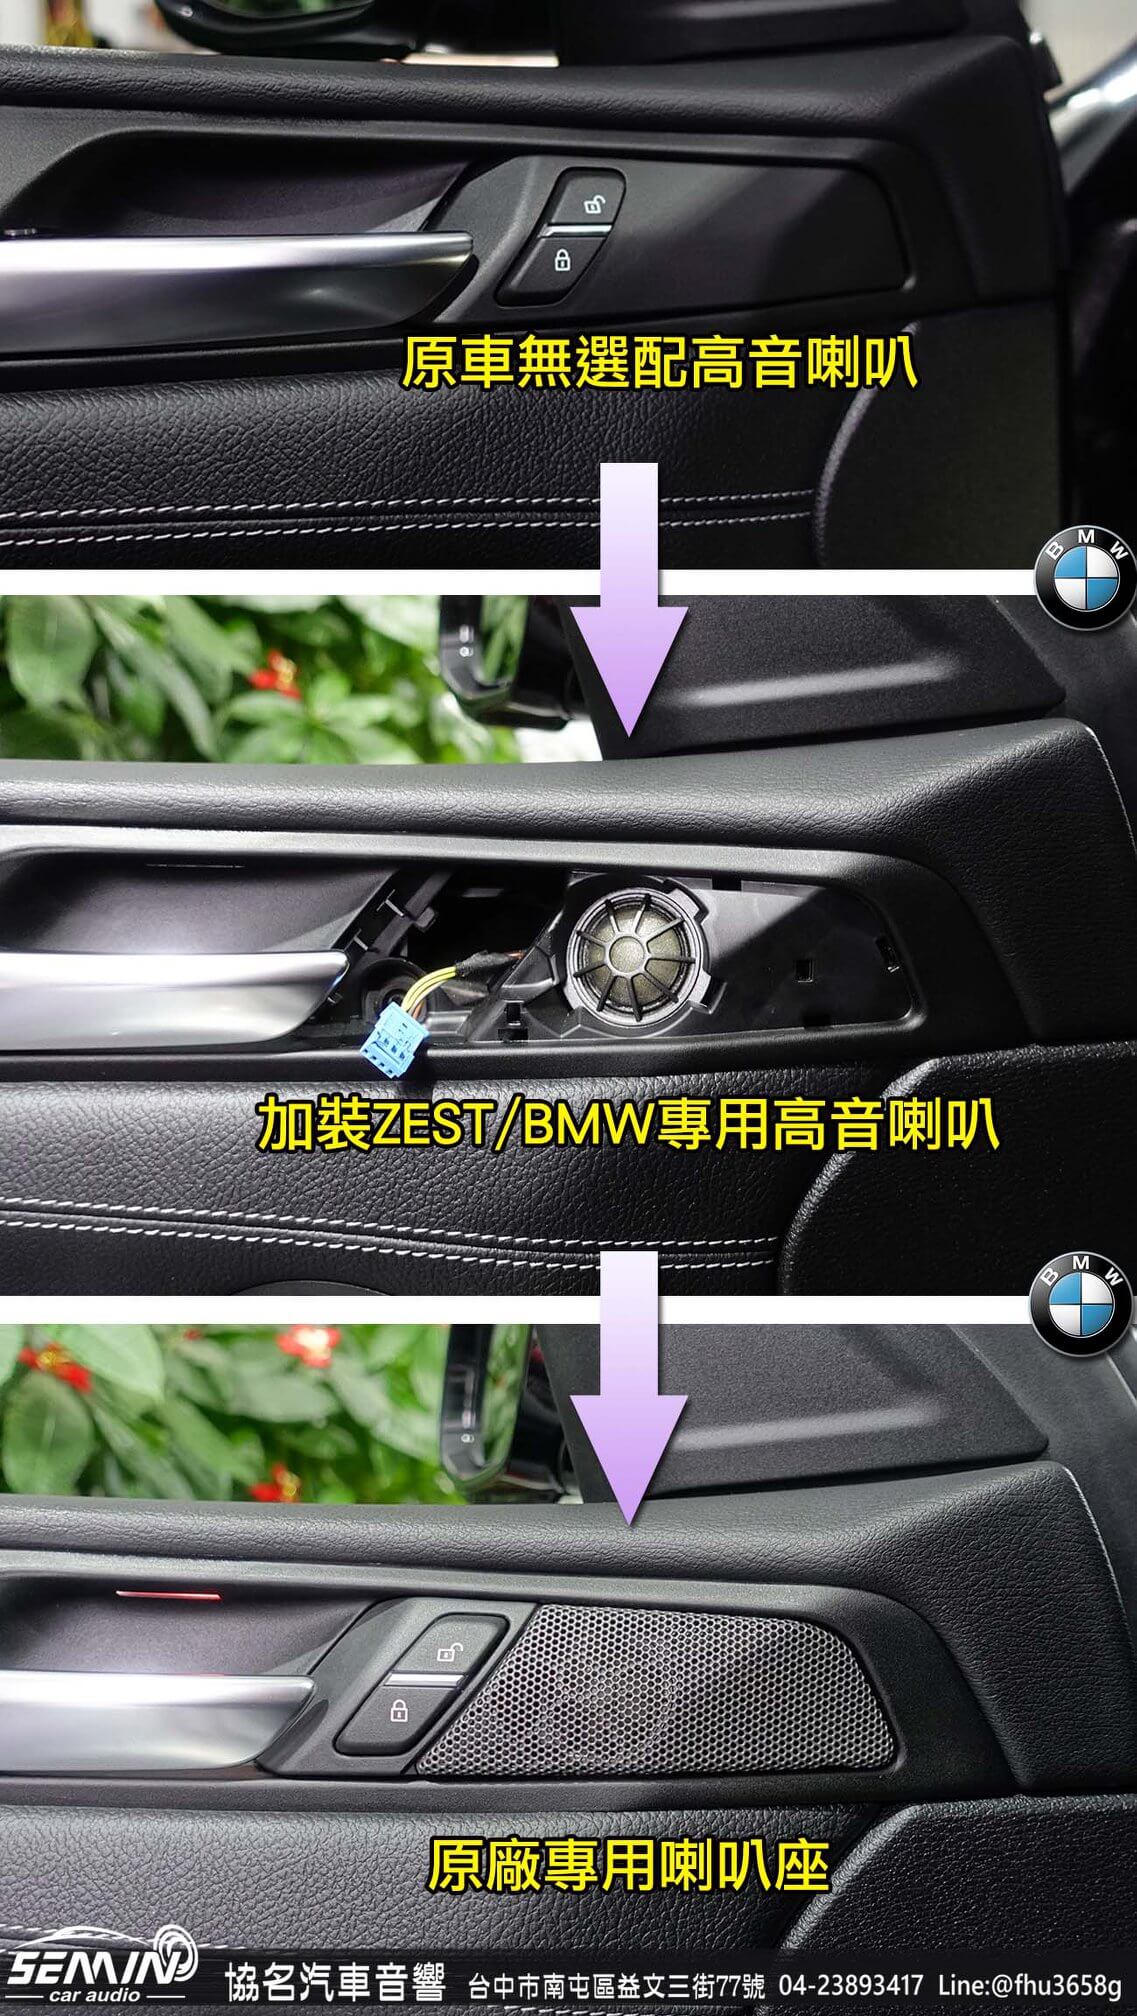 BMW X4 車主林先生換 ZEST AUDIO 喇叭